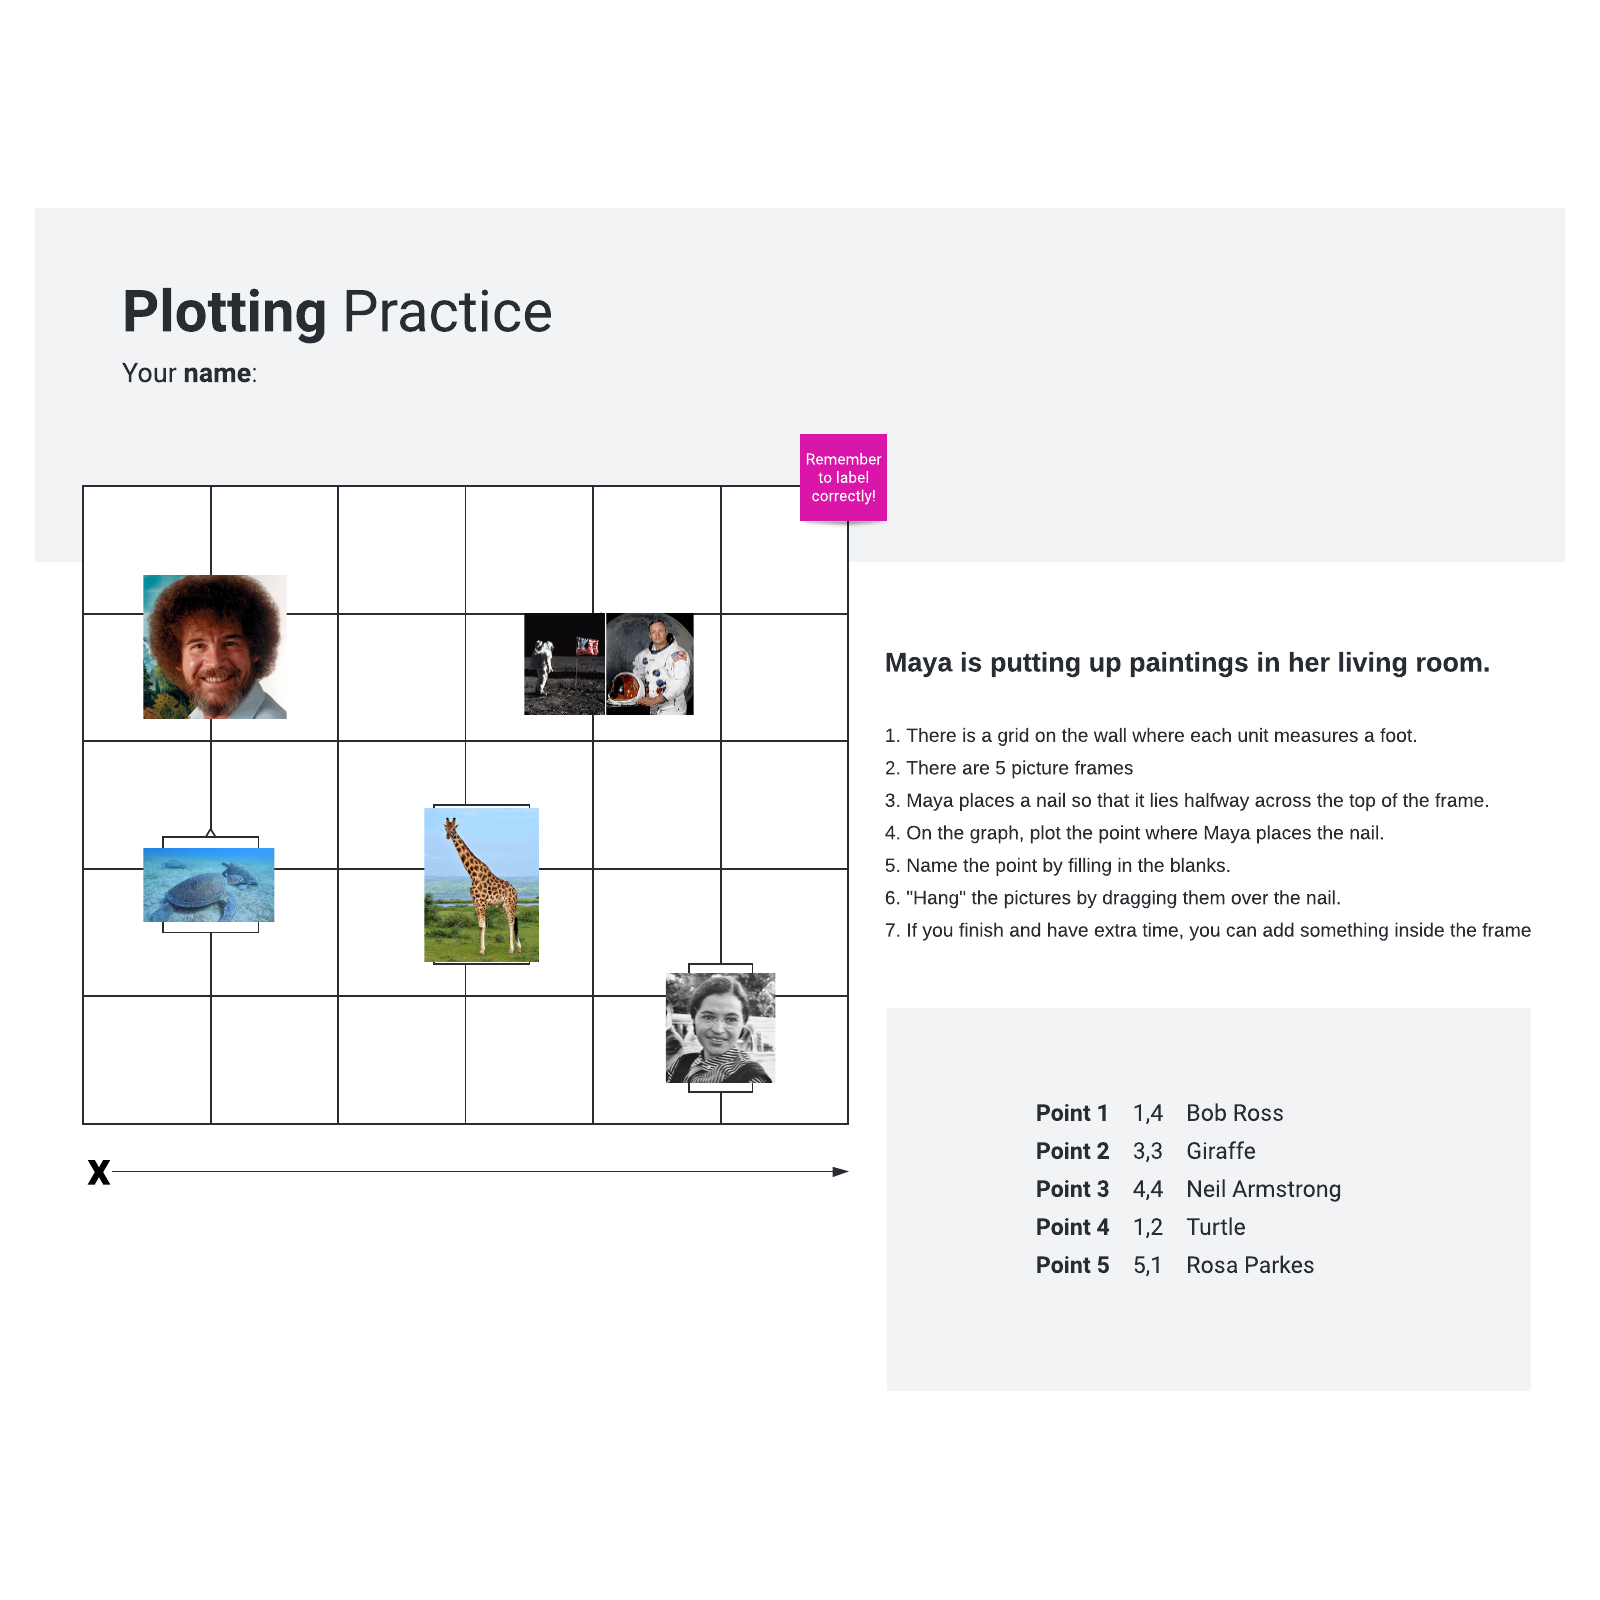 Plotting practice example